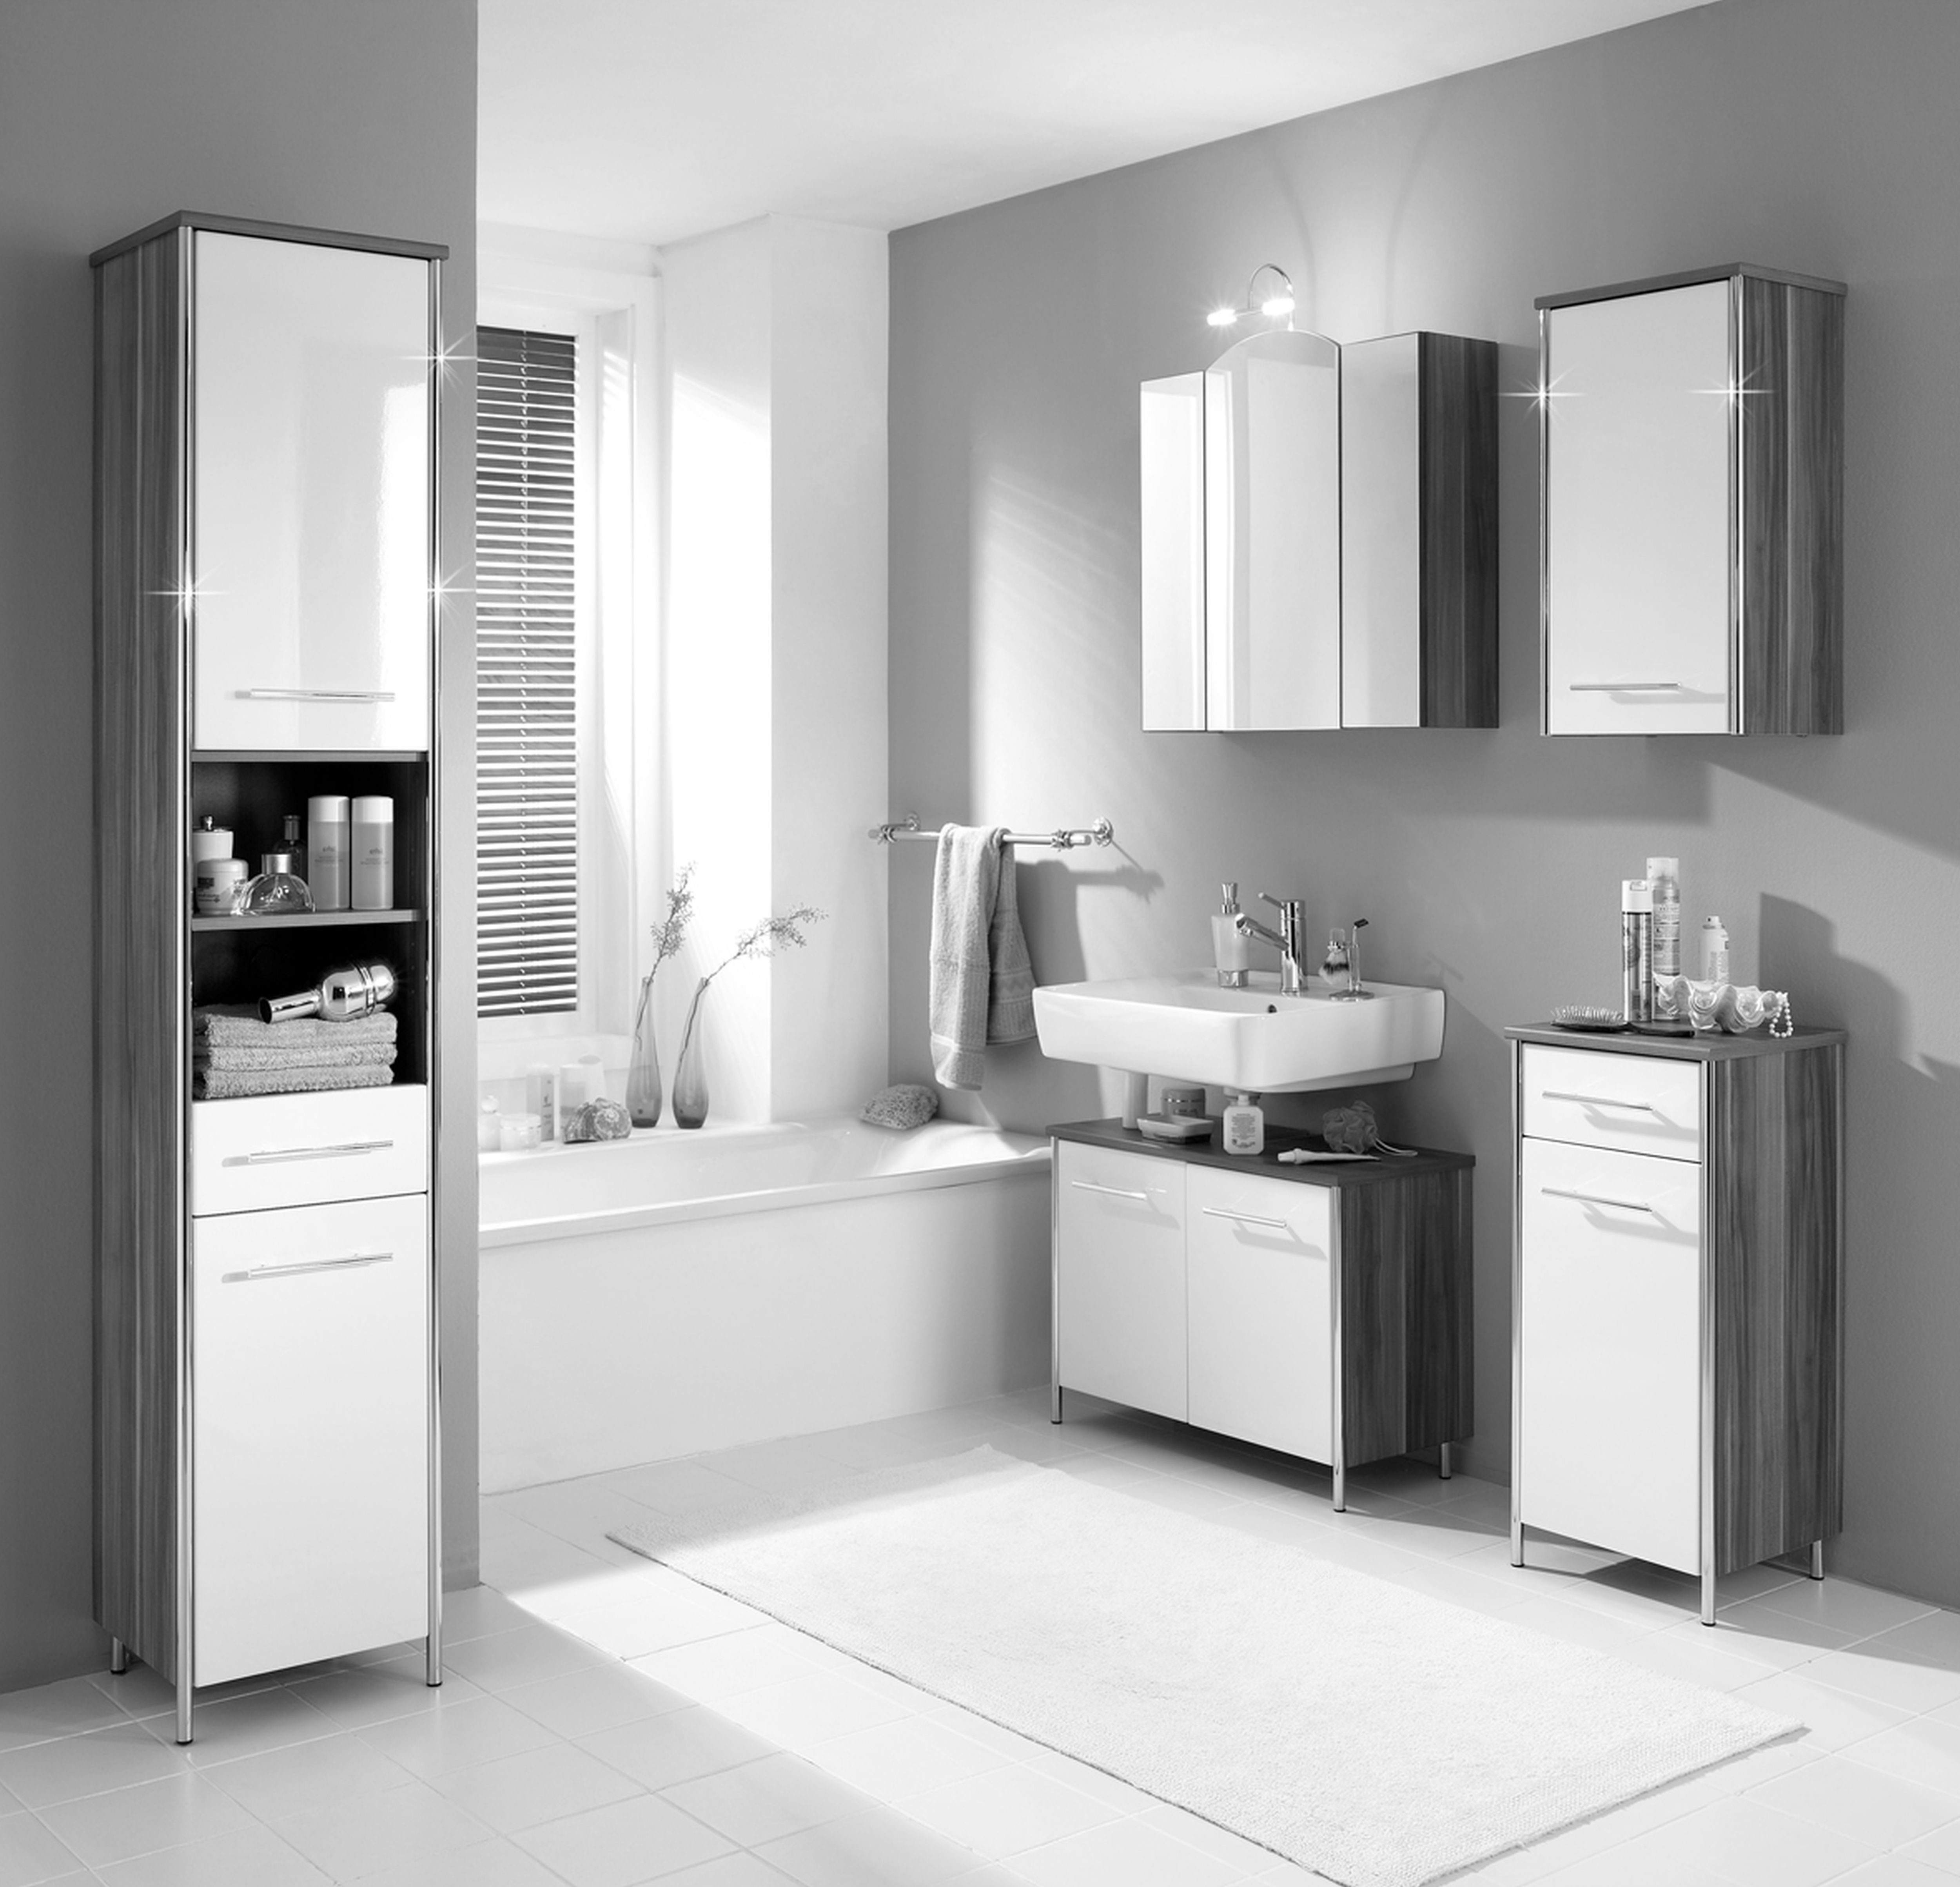 bathroom-bathroom-designs-010-craftsman-style-mesmerizing-subway-tile-bathroom-design-ideas-black-white-vintage-bathroom-tile-patterns-ideas